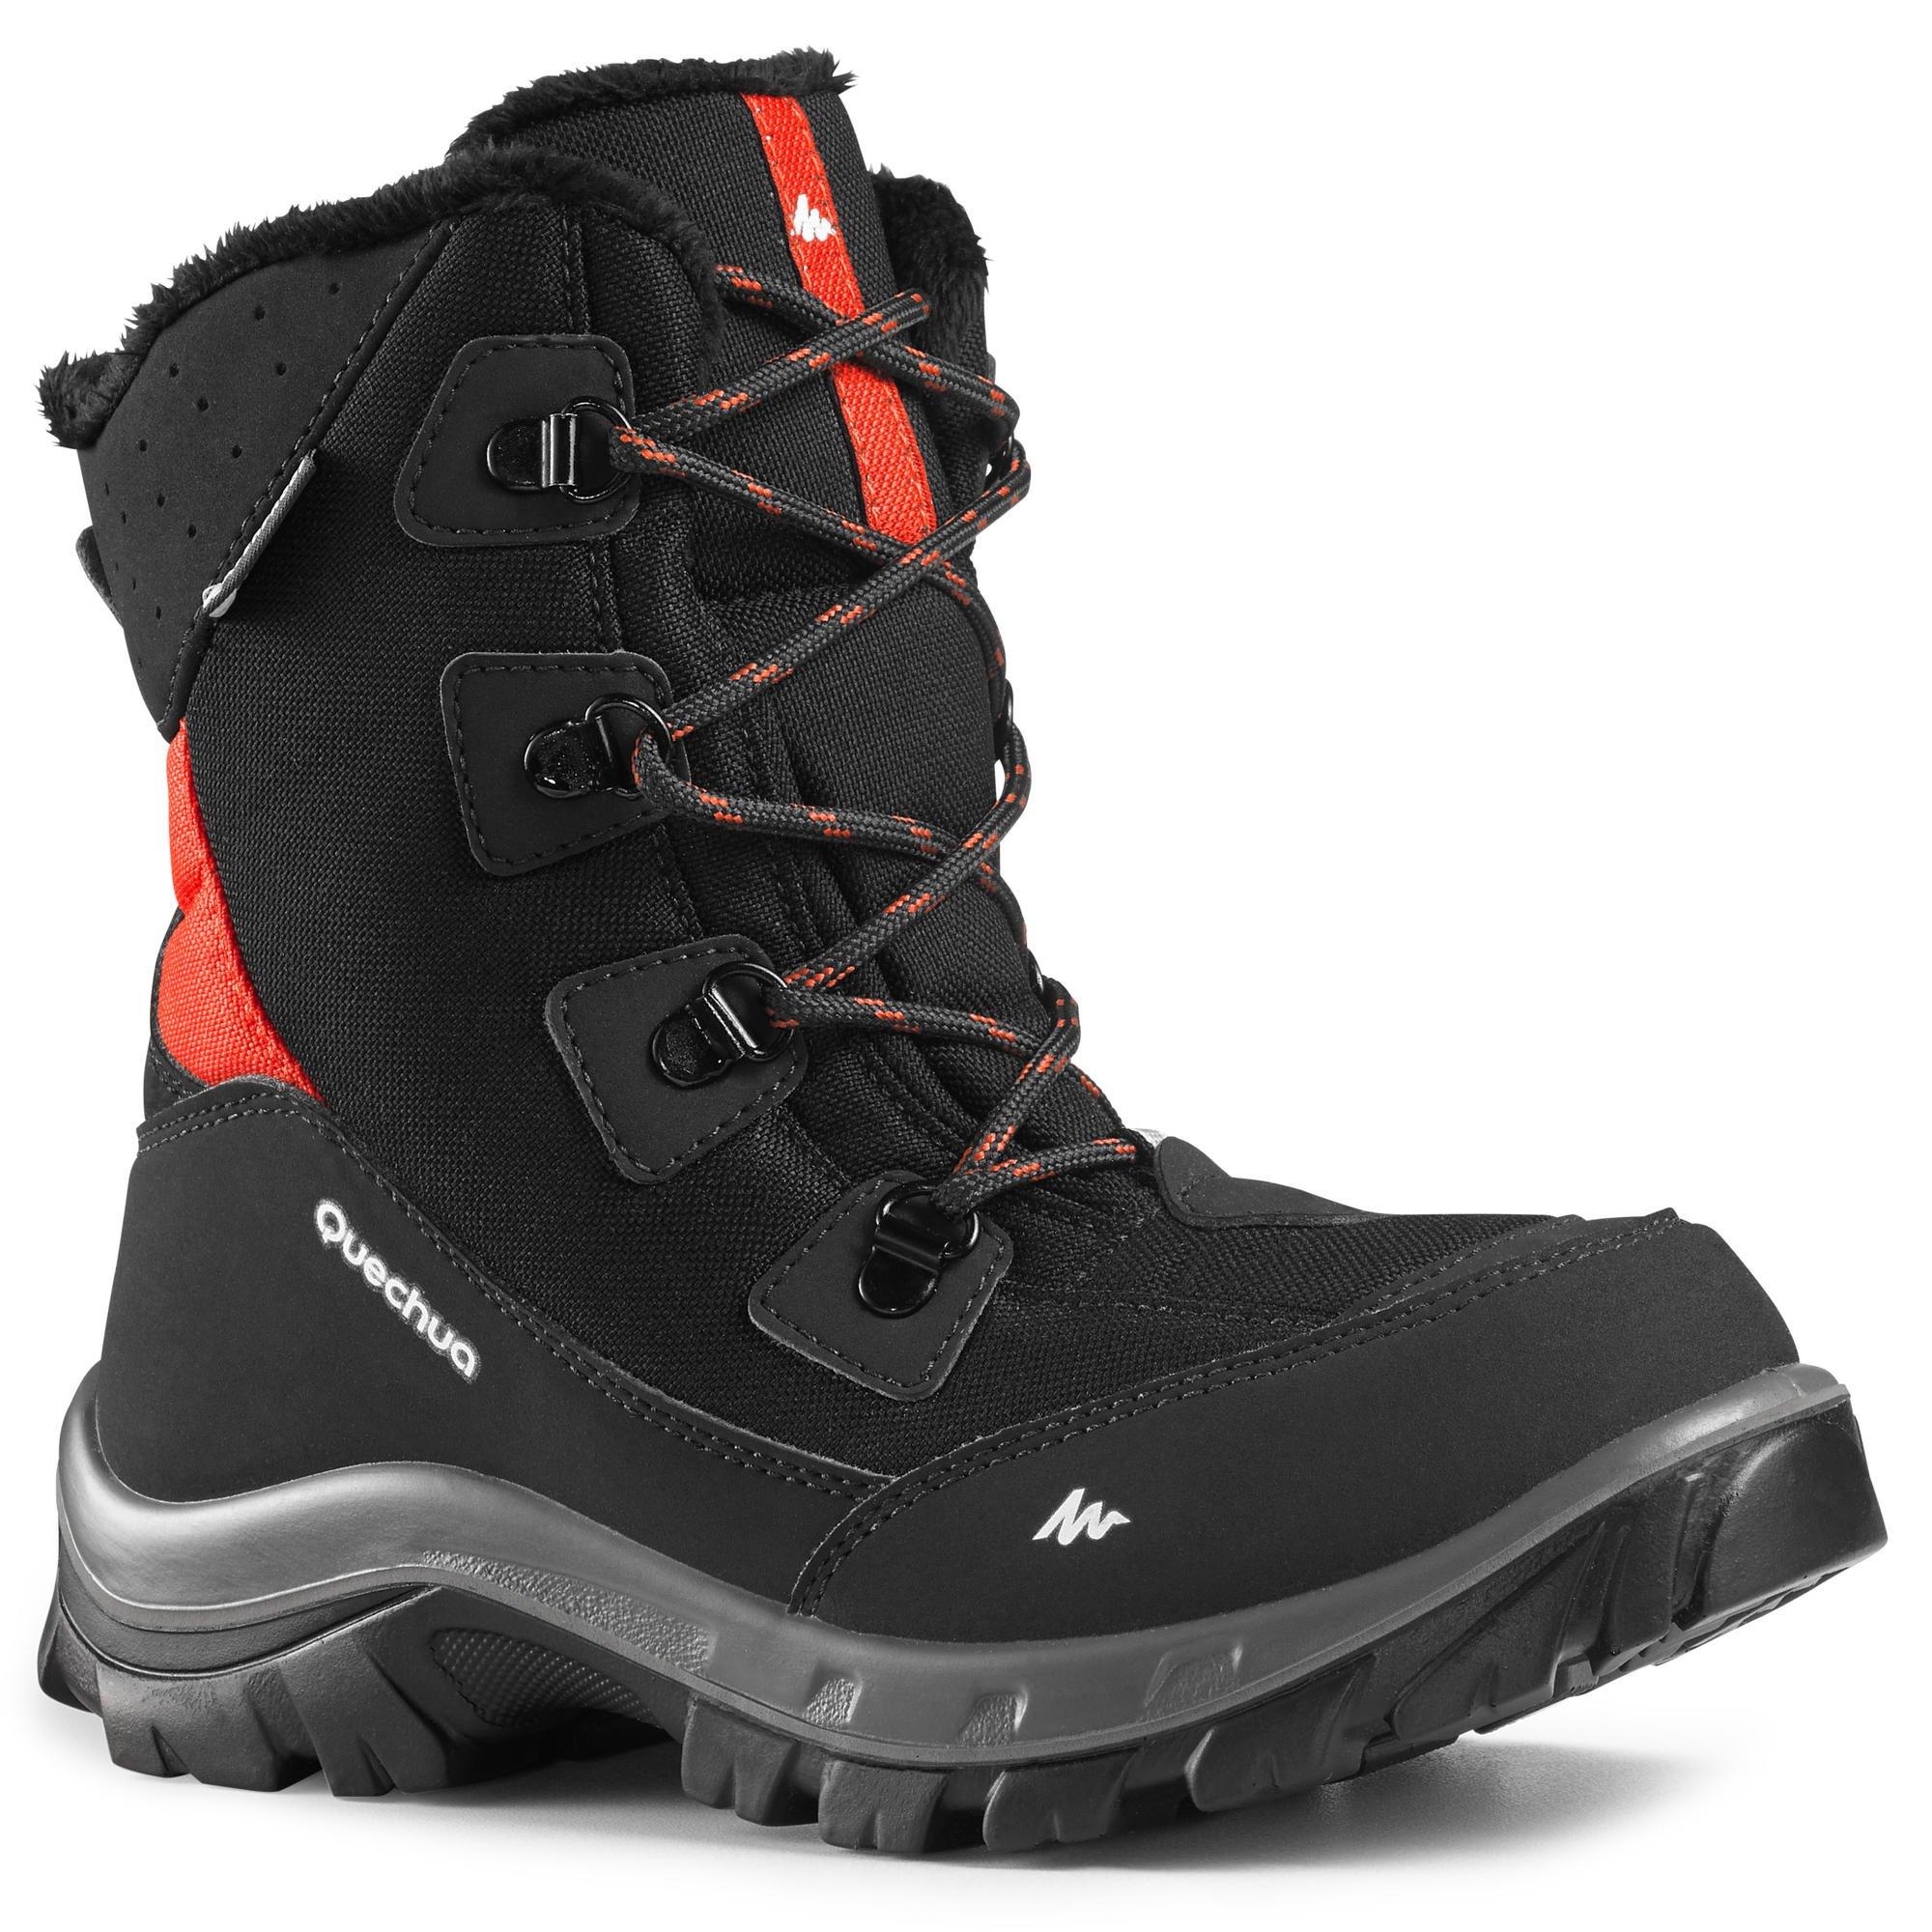 Decathlon Warm Waterproof Hiking Boots Warm High Laces